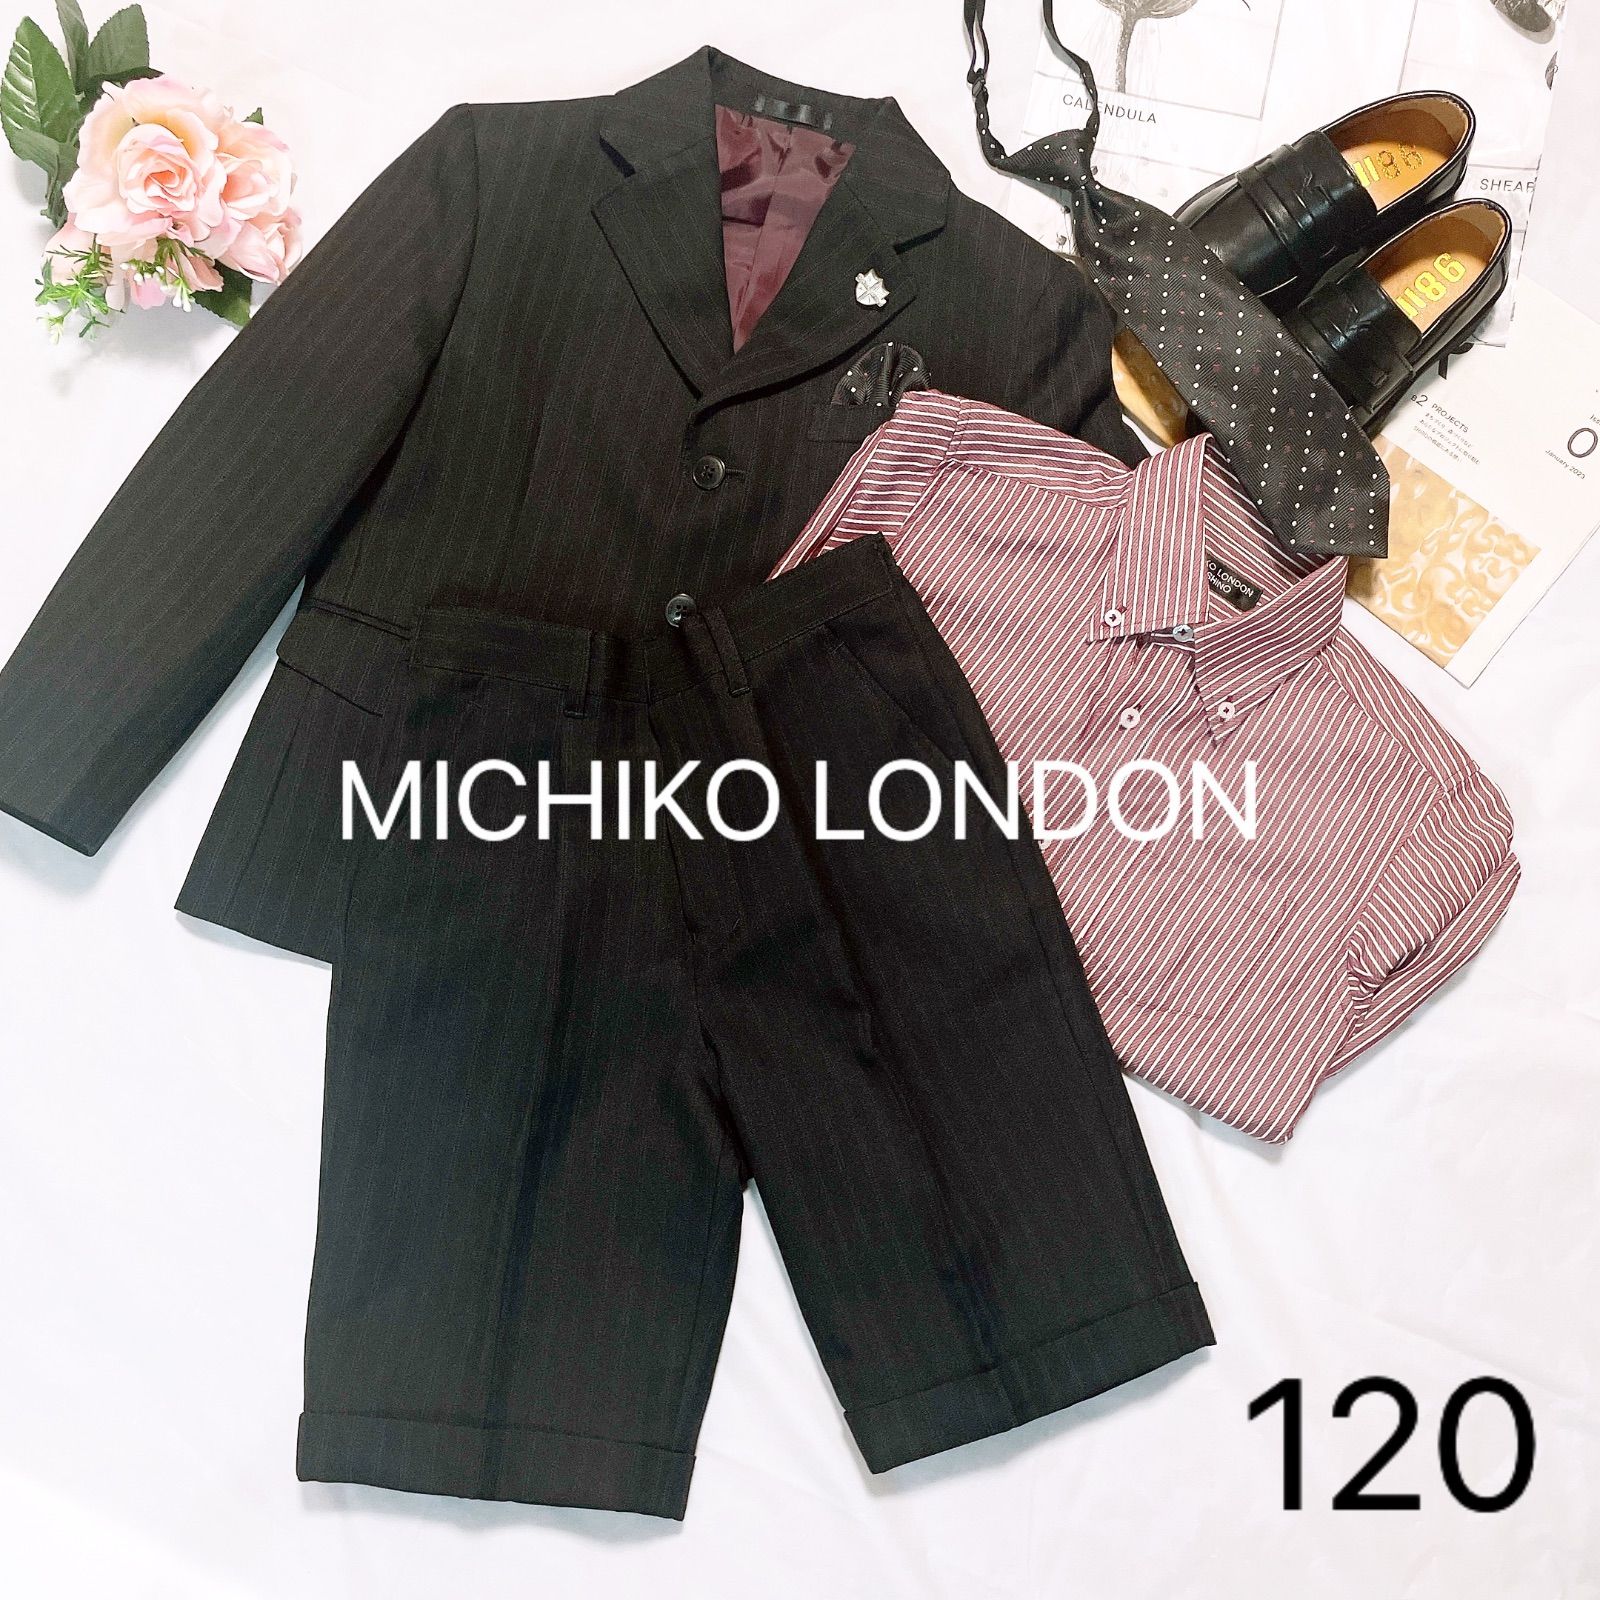 MICHIKO LONDON 120 スーツセット - フォーマル